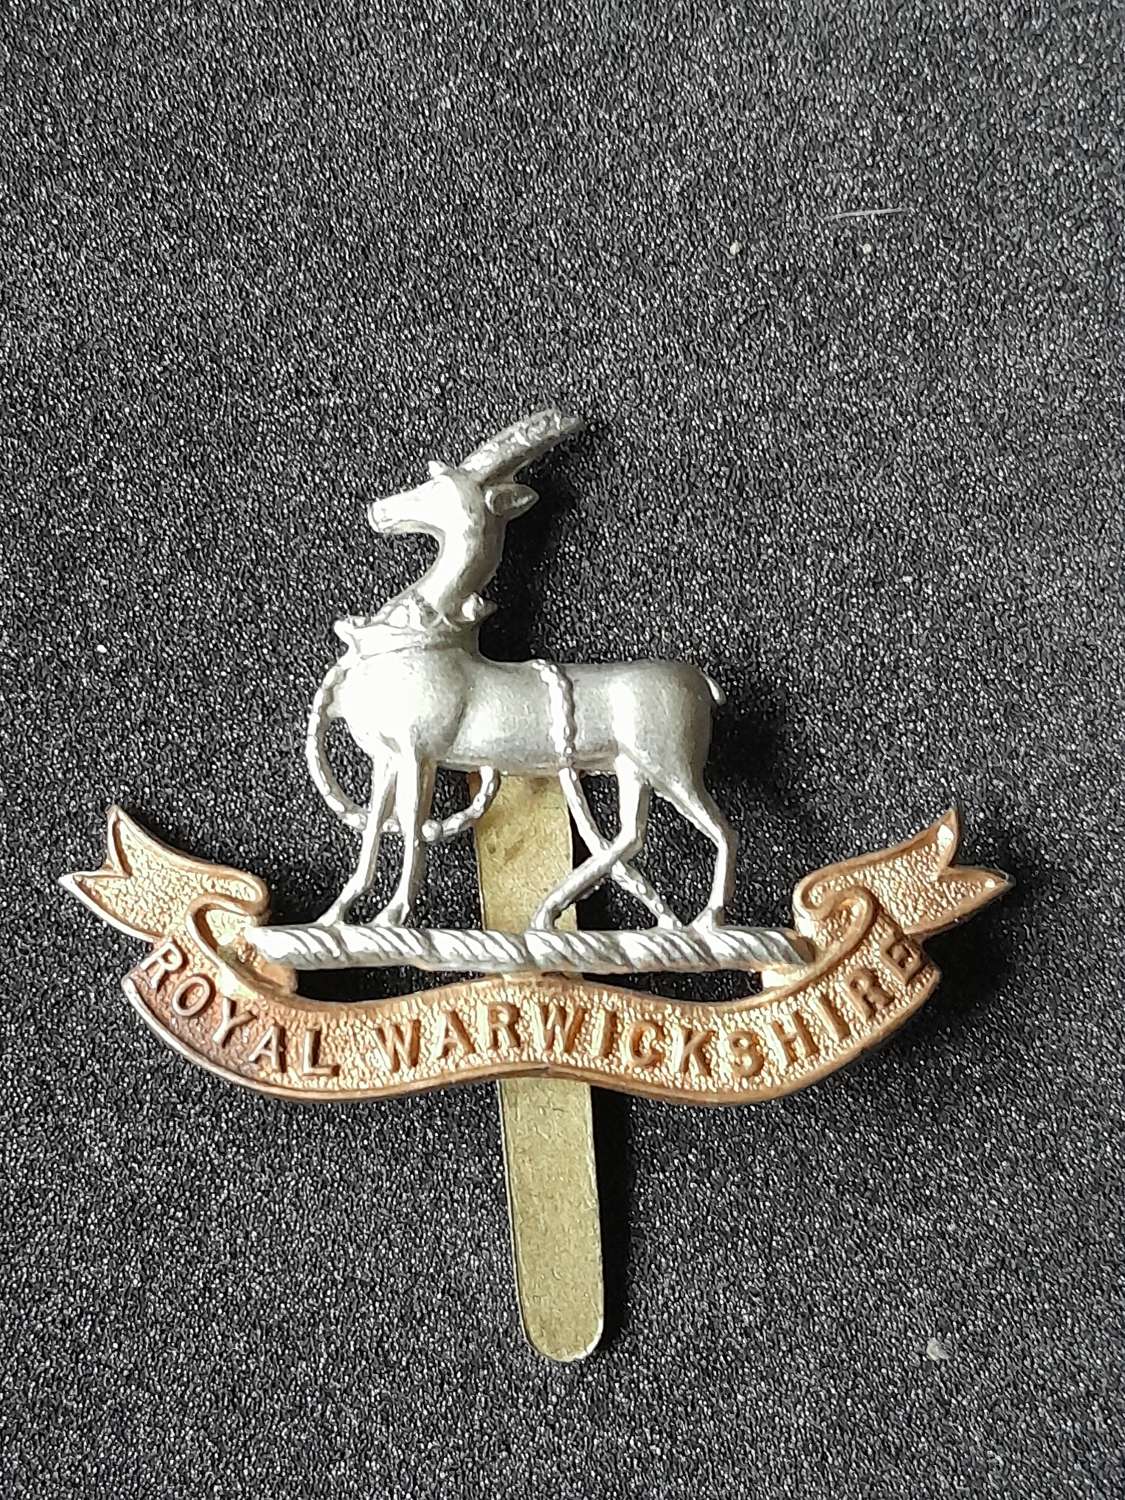 Royal Warwickshire Cap Badge